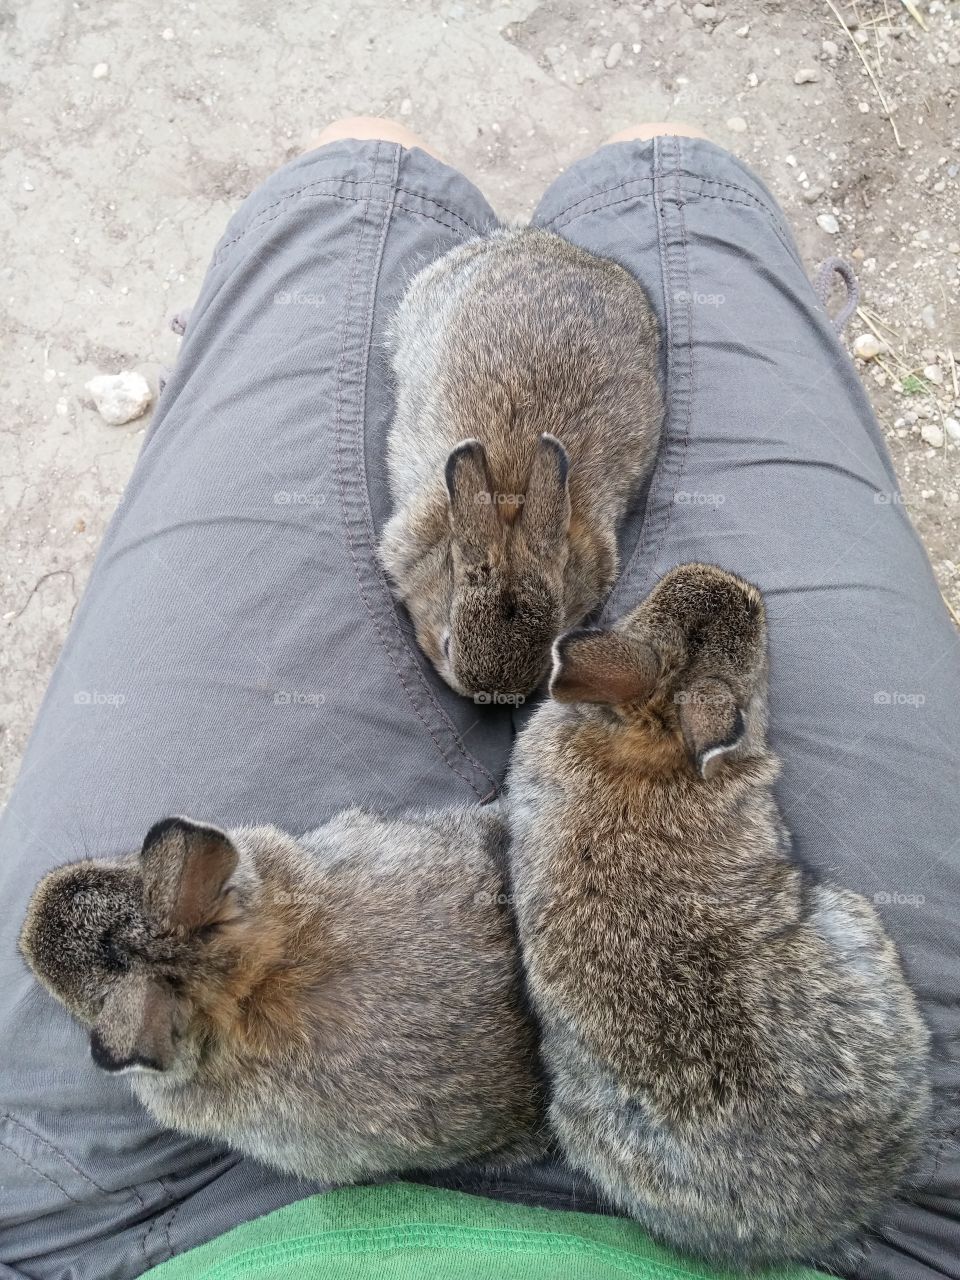 fuzzy baby bunnies